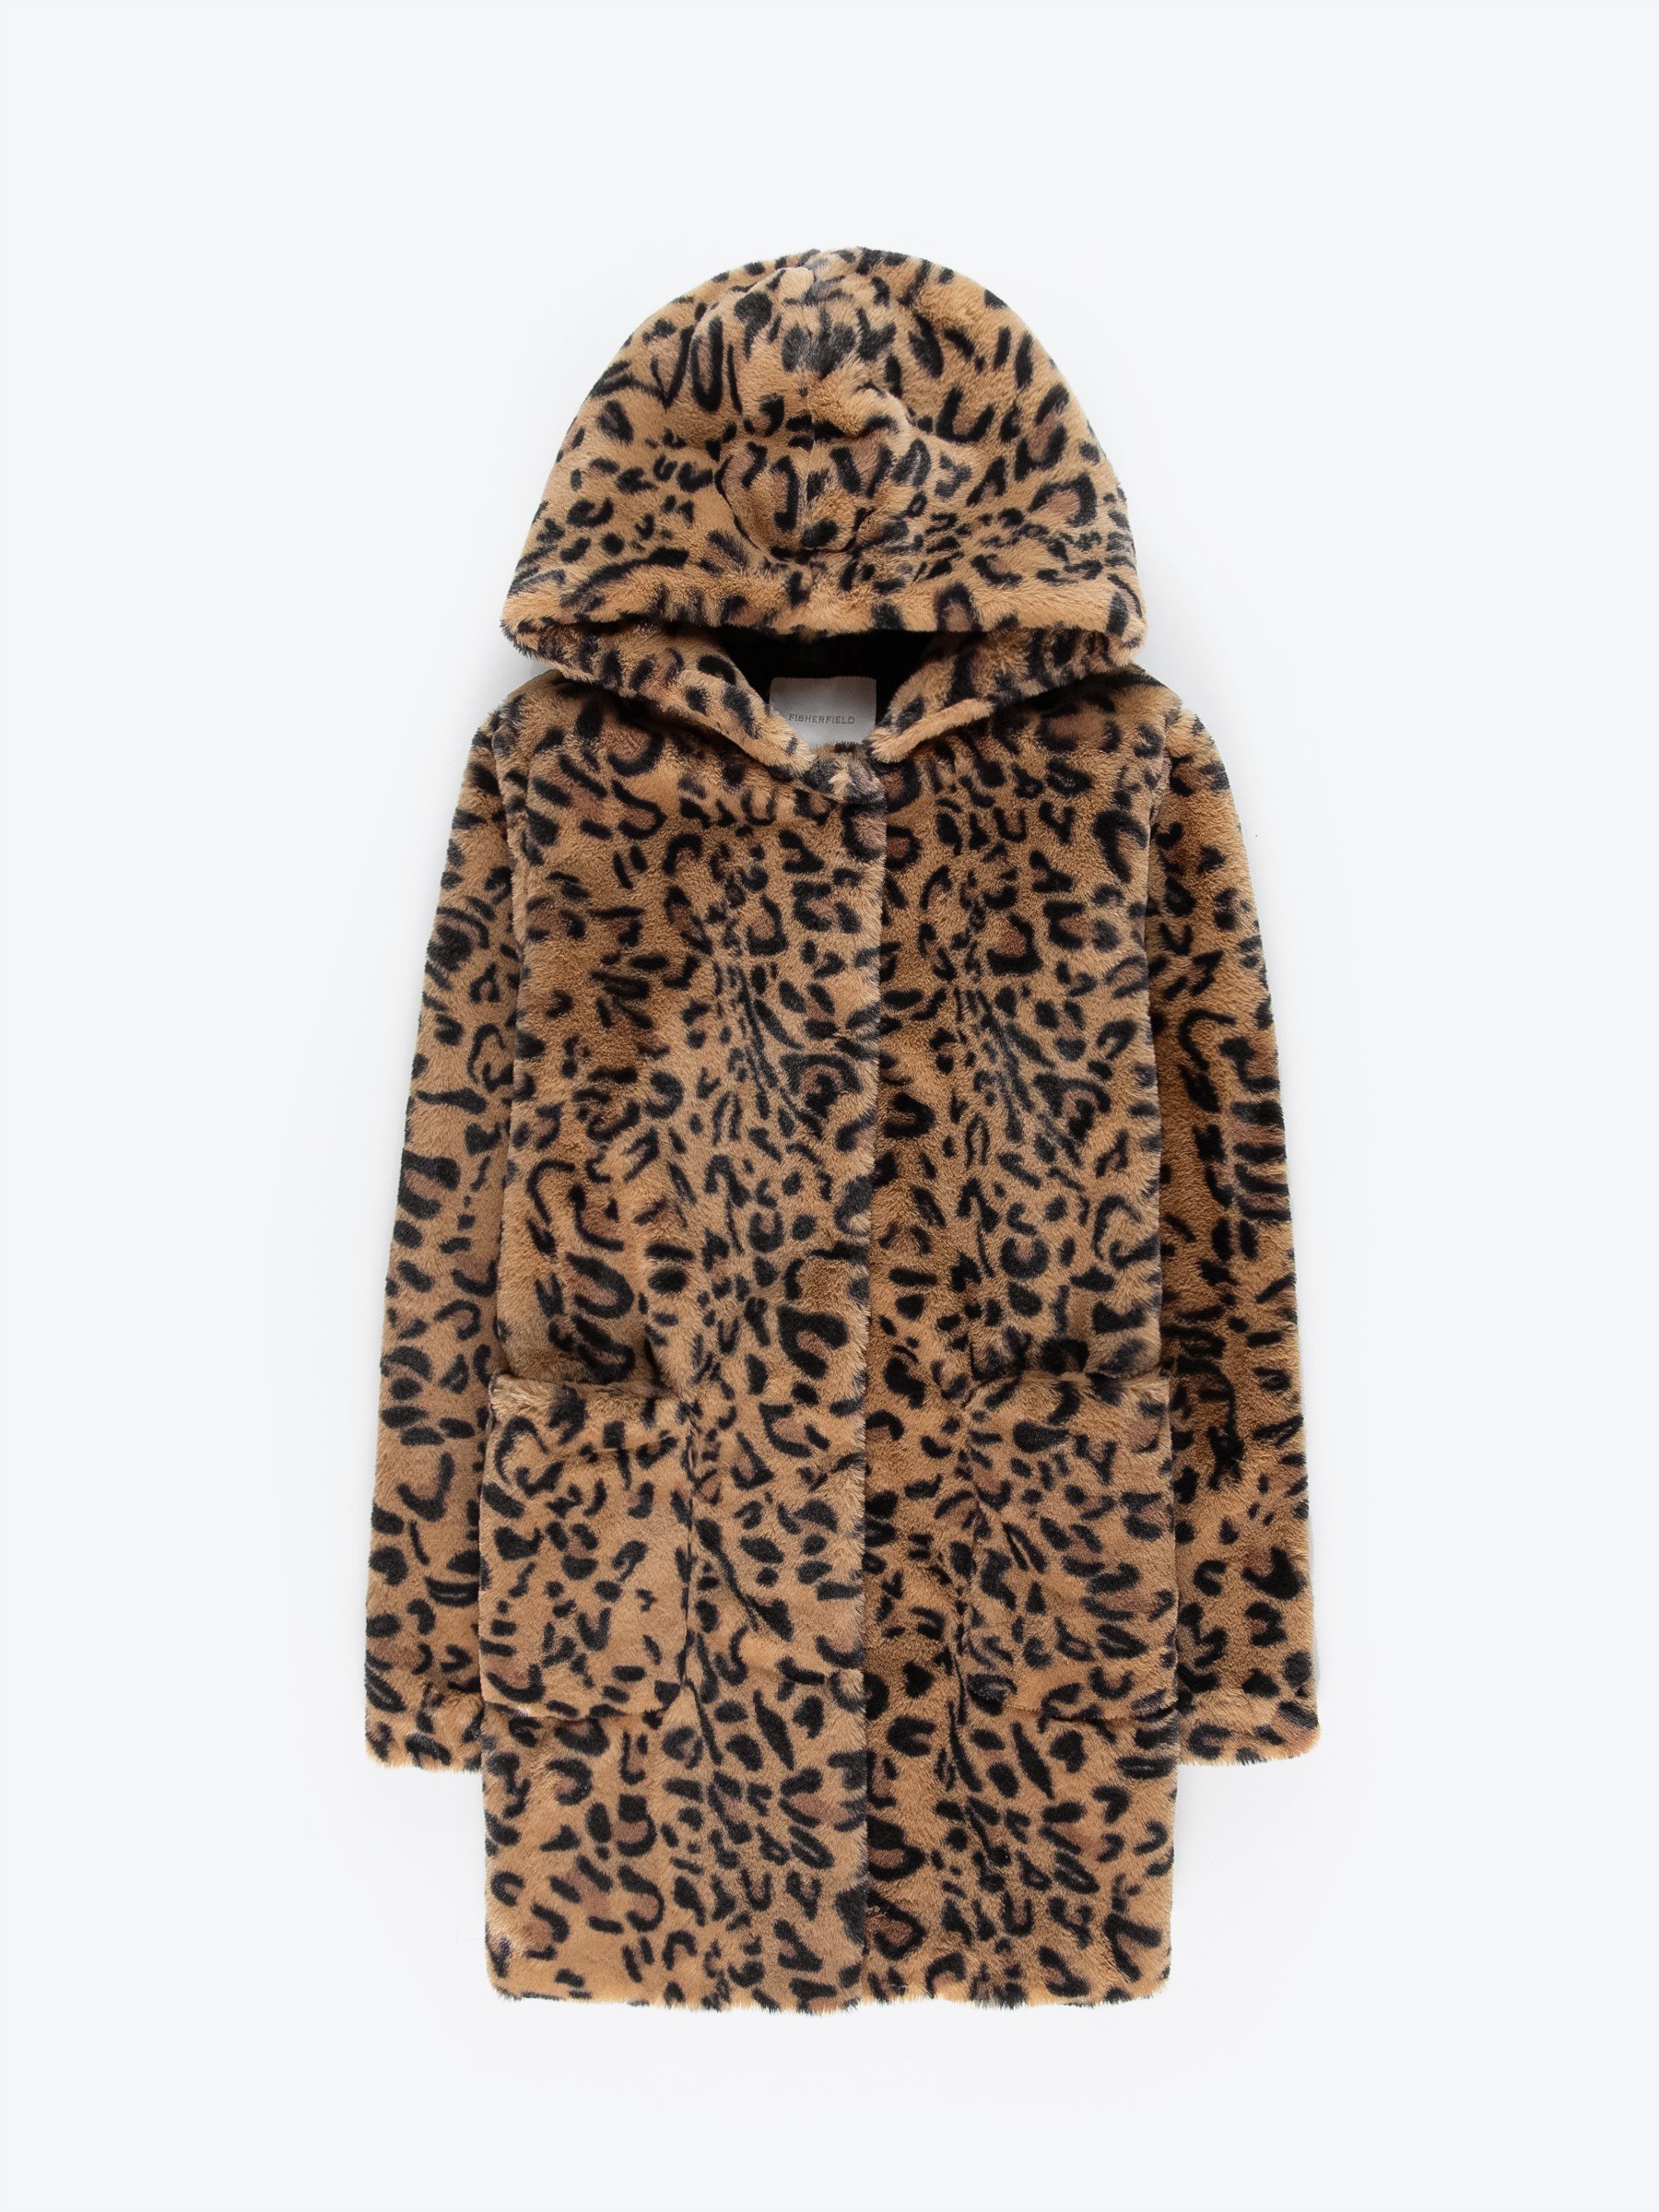 leopard fur coat with hood